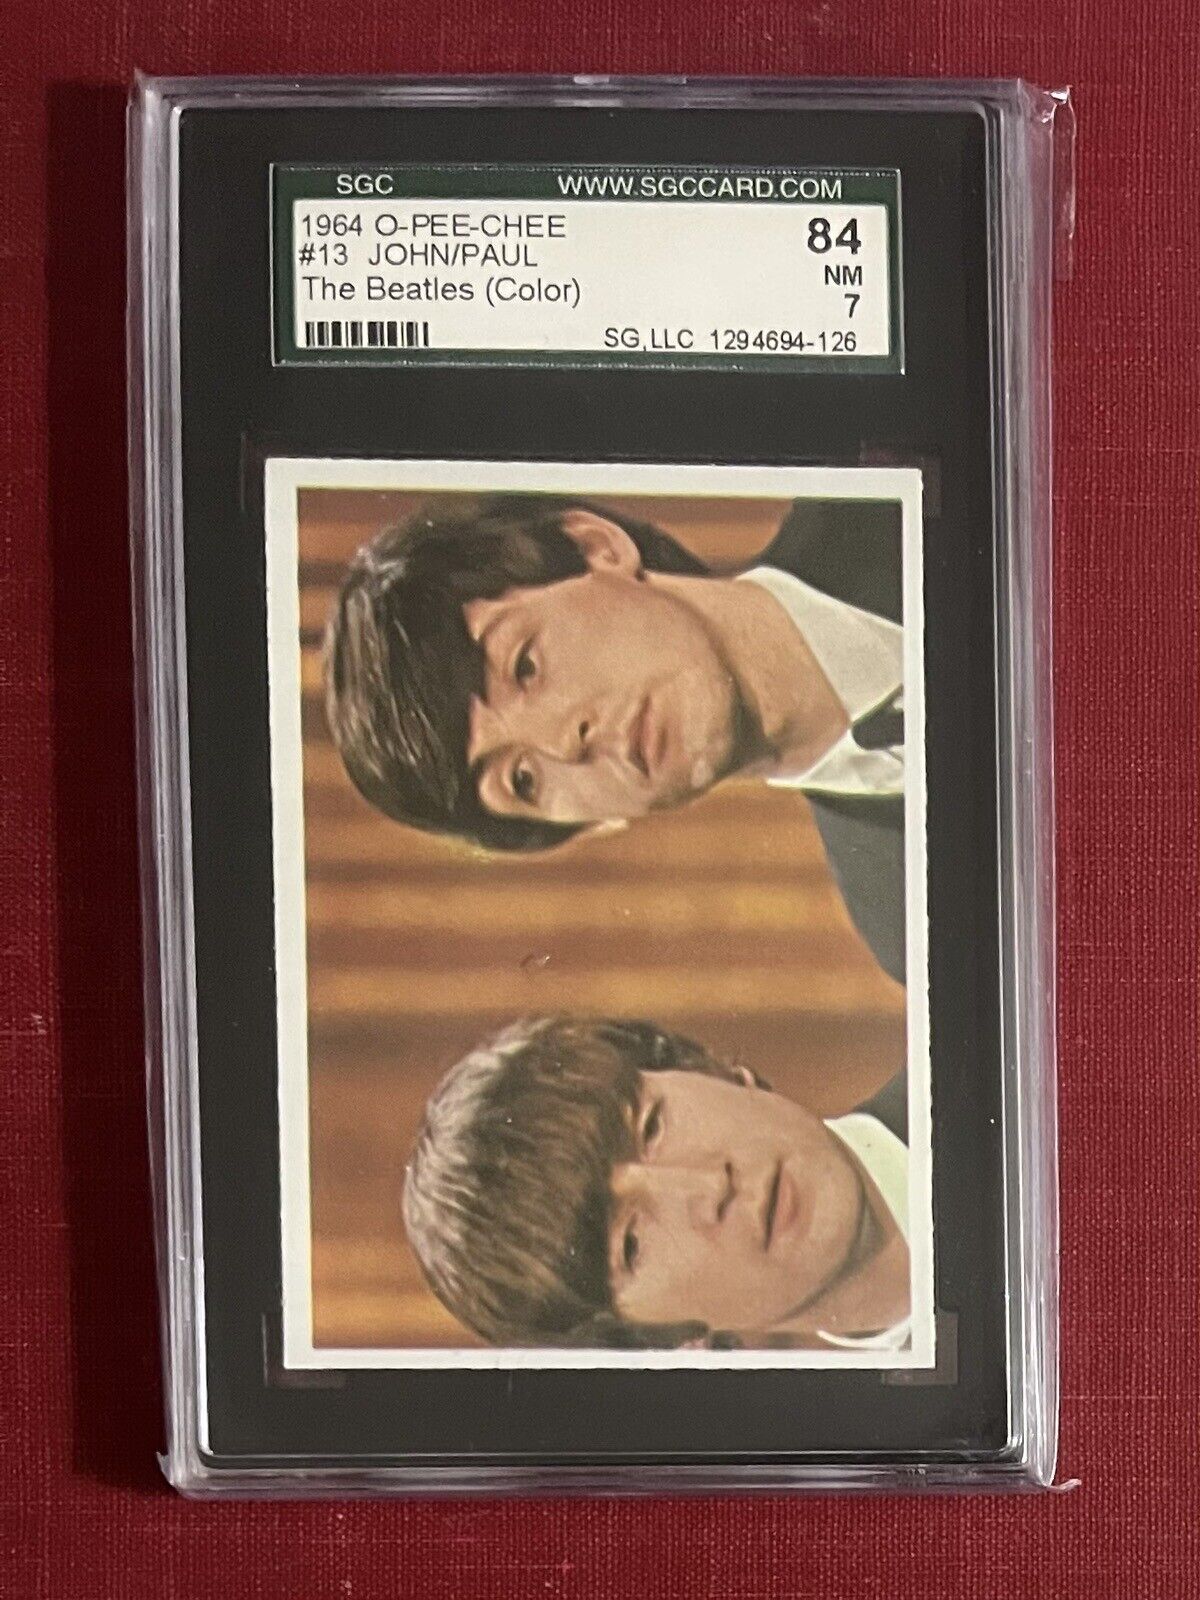 1964 O-Pee-Chee The Beatles Color #13 John/Paul SGC 7